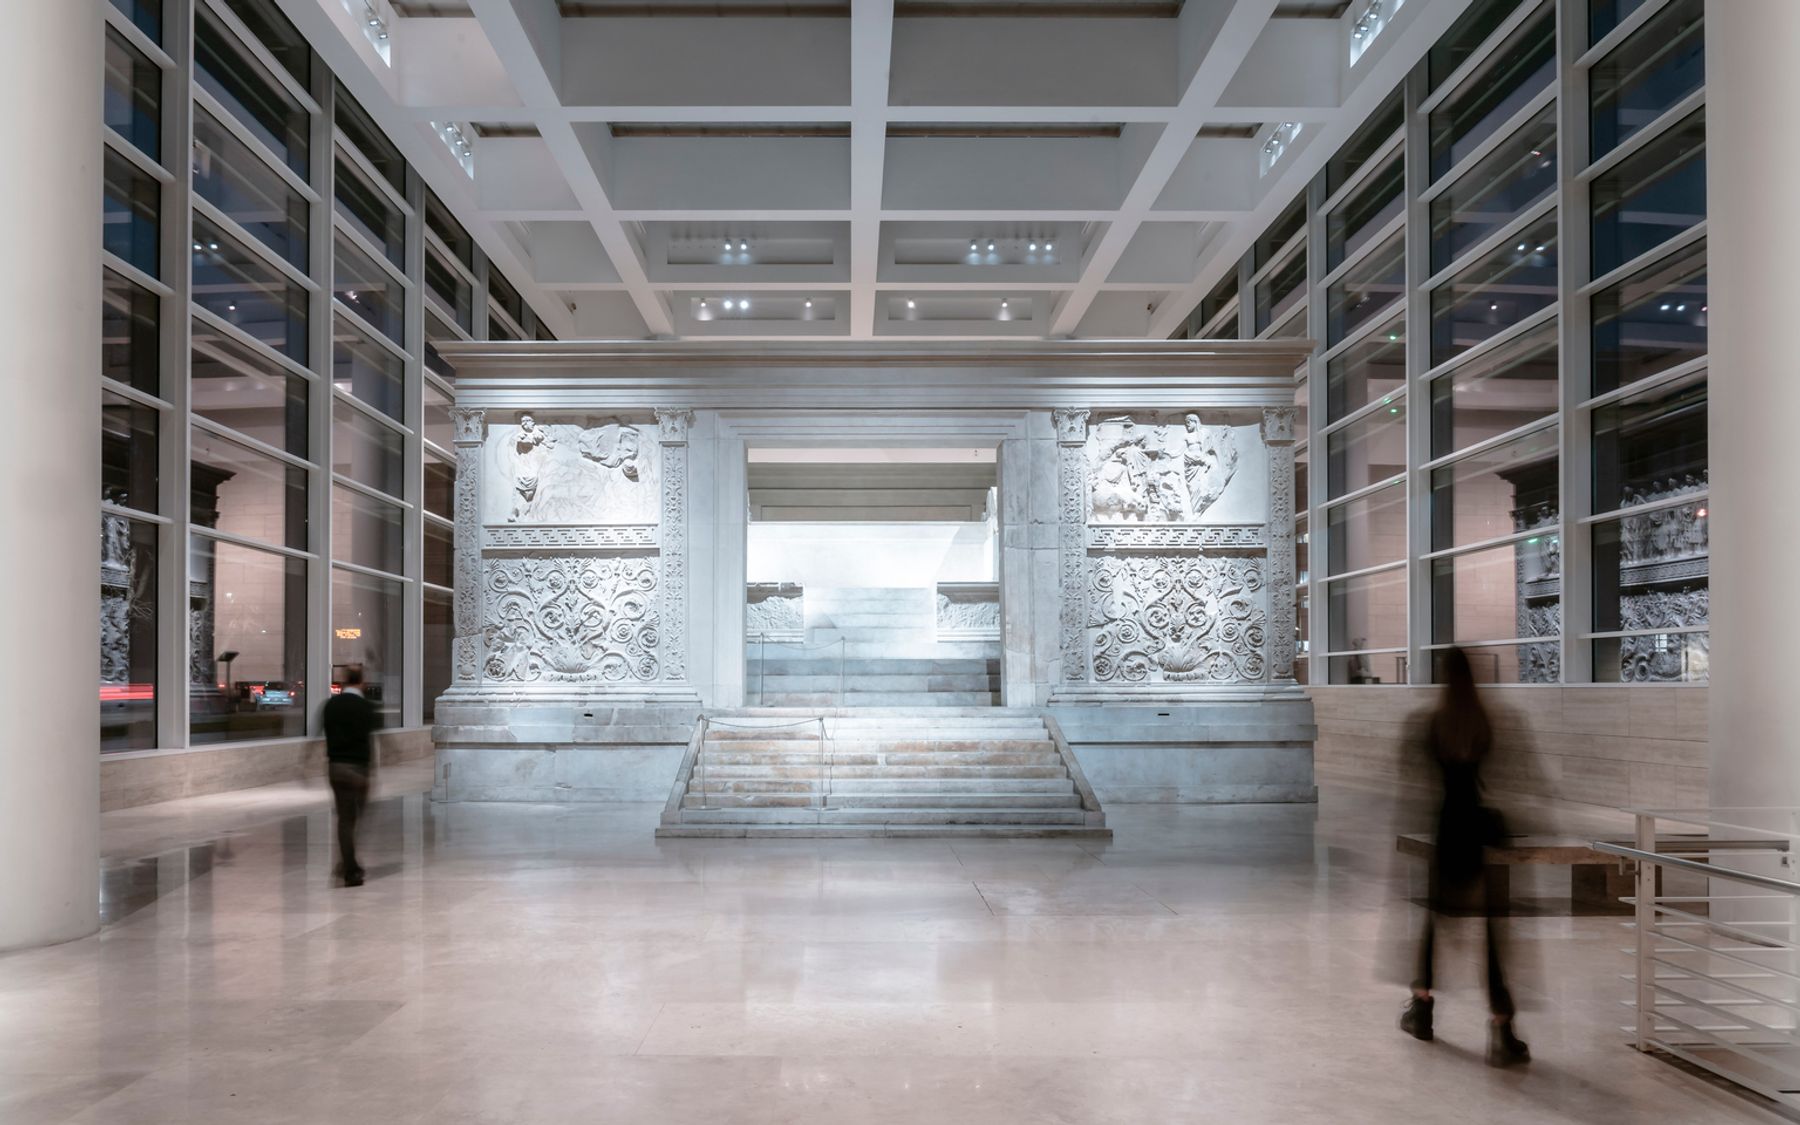 Ara Pacis, Rome. Architecture : Richard Meier & Partners Architects, New York / USA. Conception lumière : Fisher Marantz Stone, New York. Photographie : Marcela Schneider Ferreira, Florence.